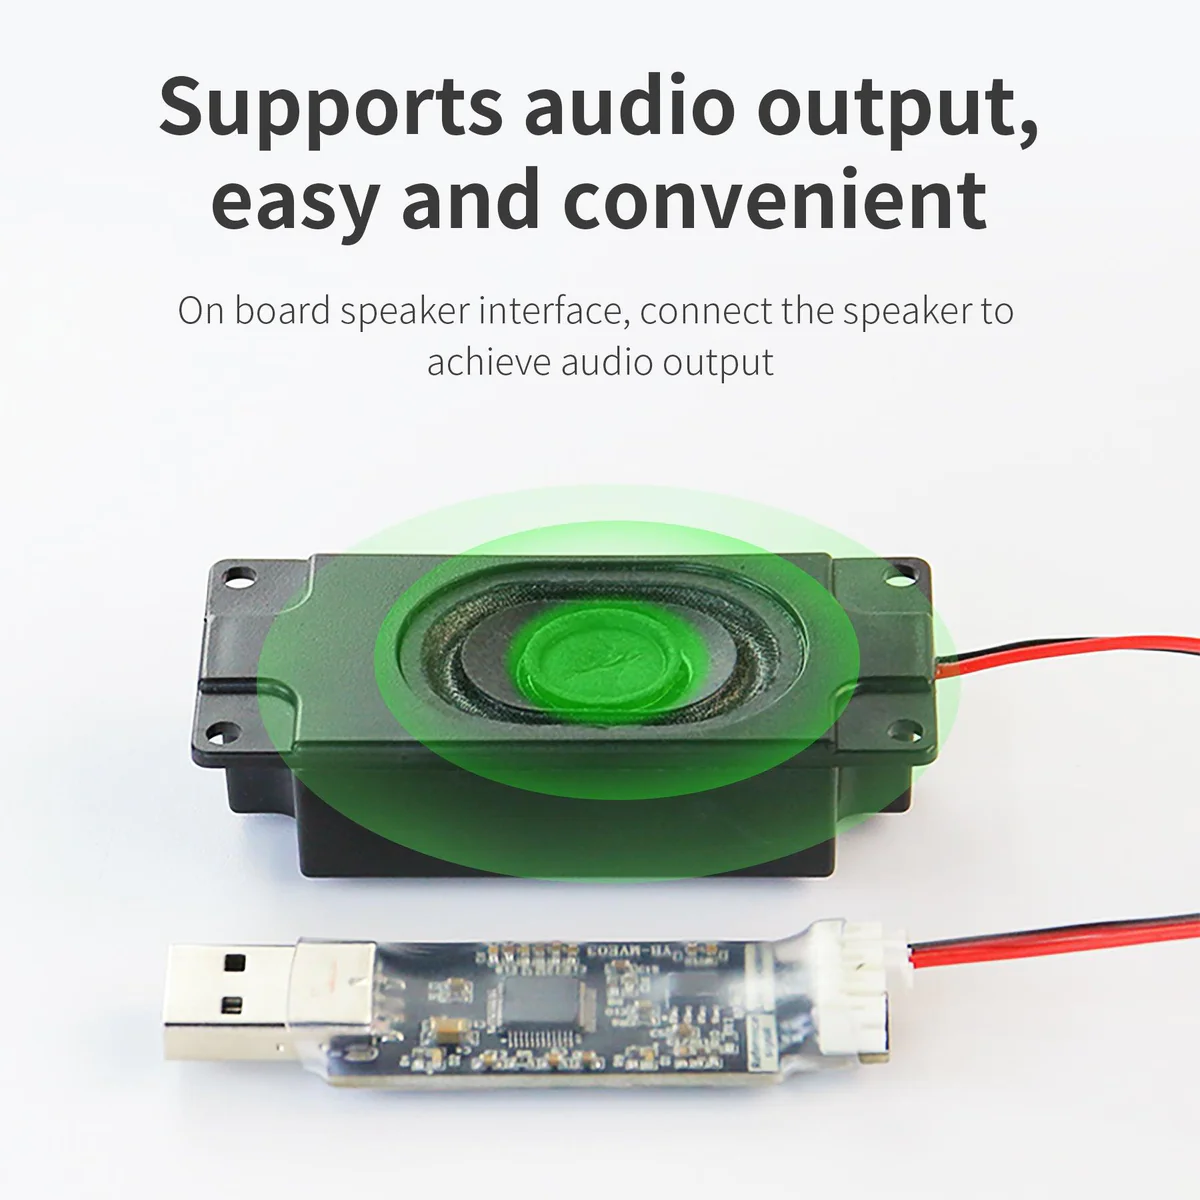 USB Sound Card and Speaker for Raspberry Pi